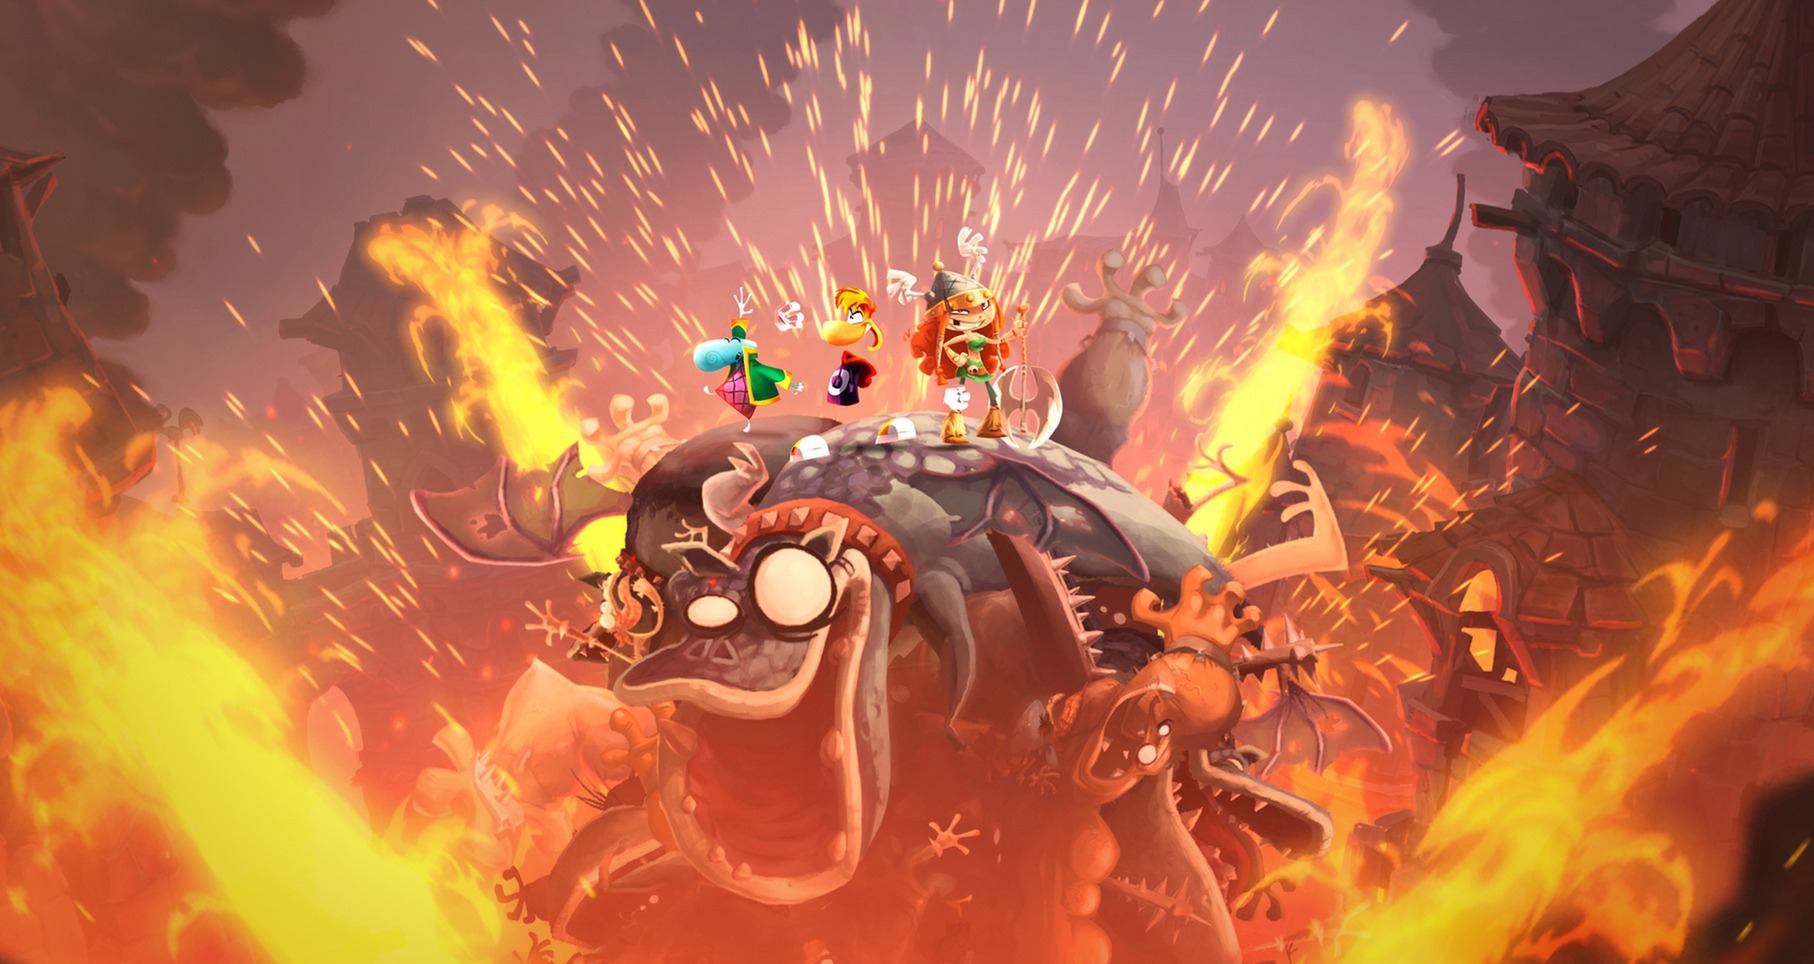 Steam Community :: Guide :: Walkthrough: Rayman Legends 100%